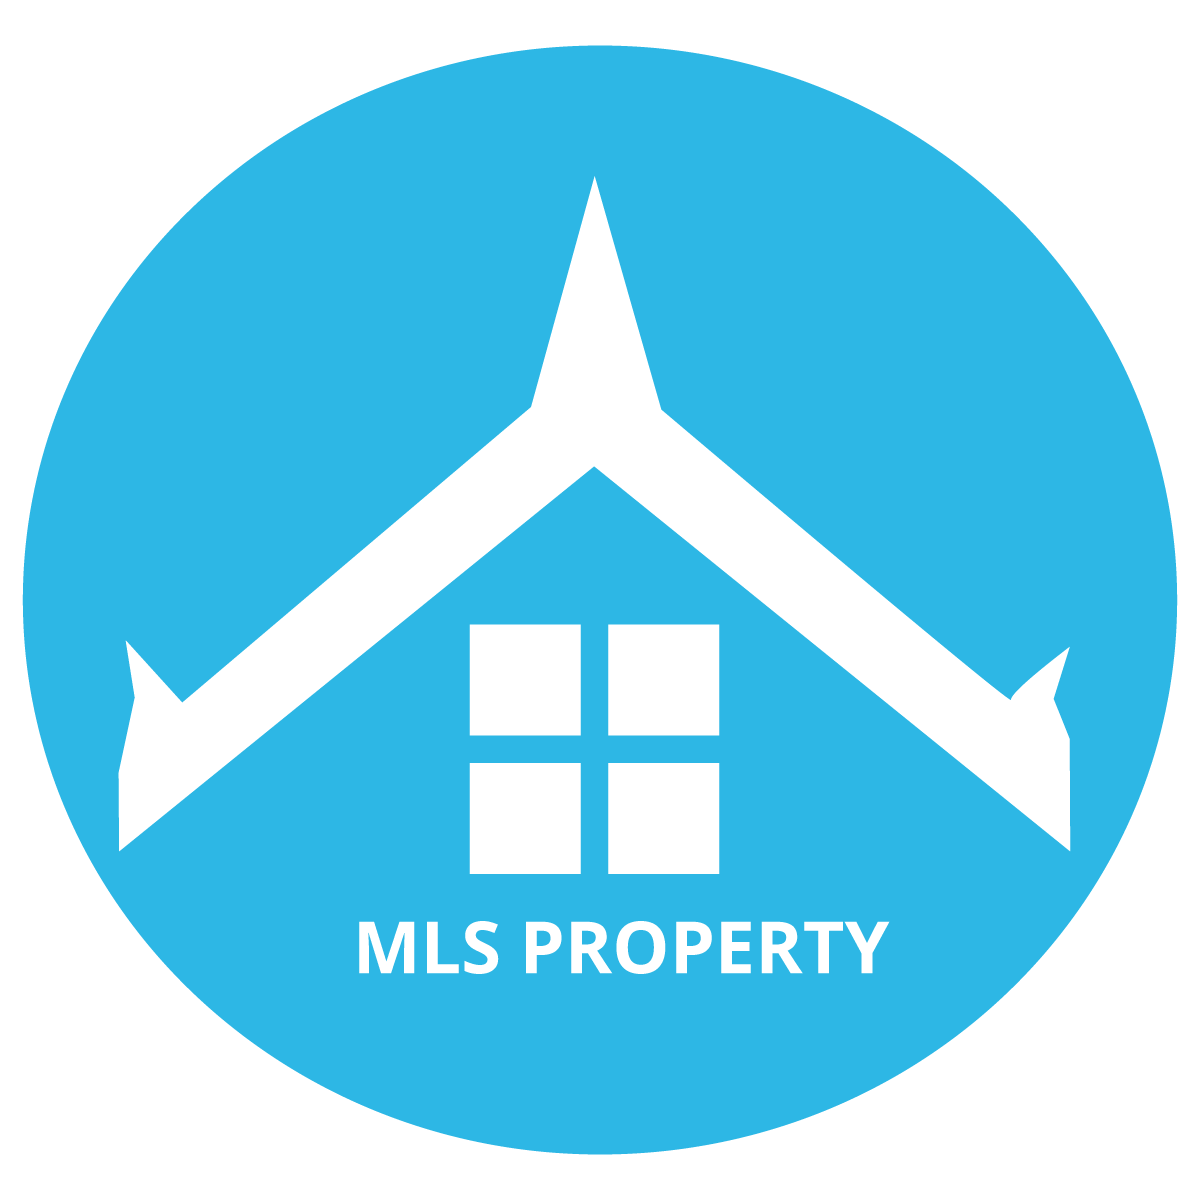 MLS Property Cambodia